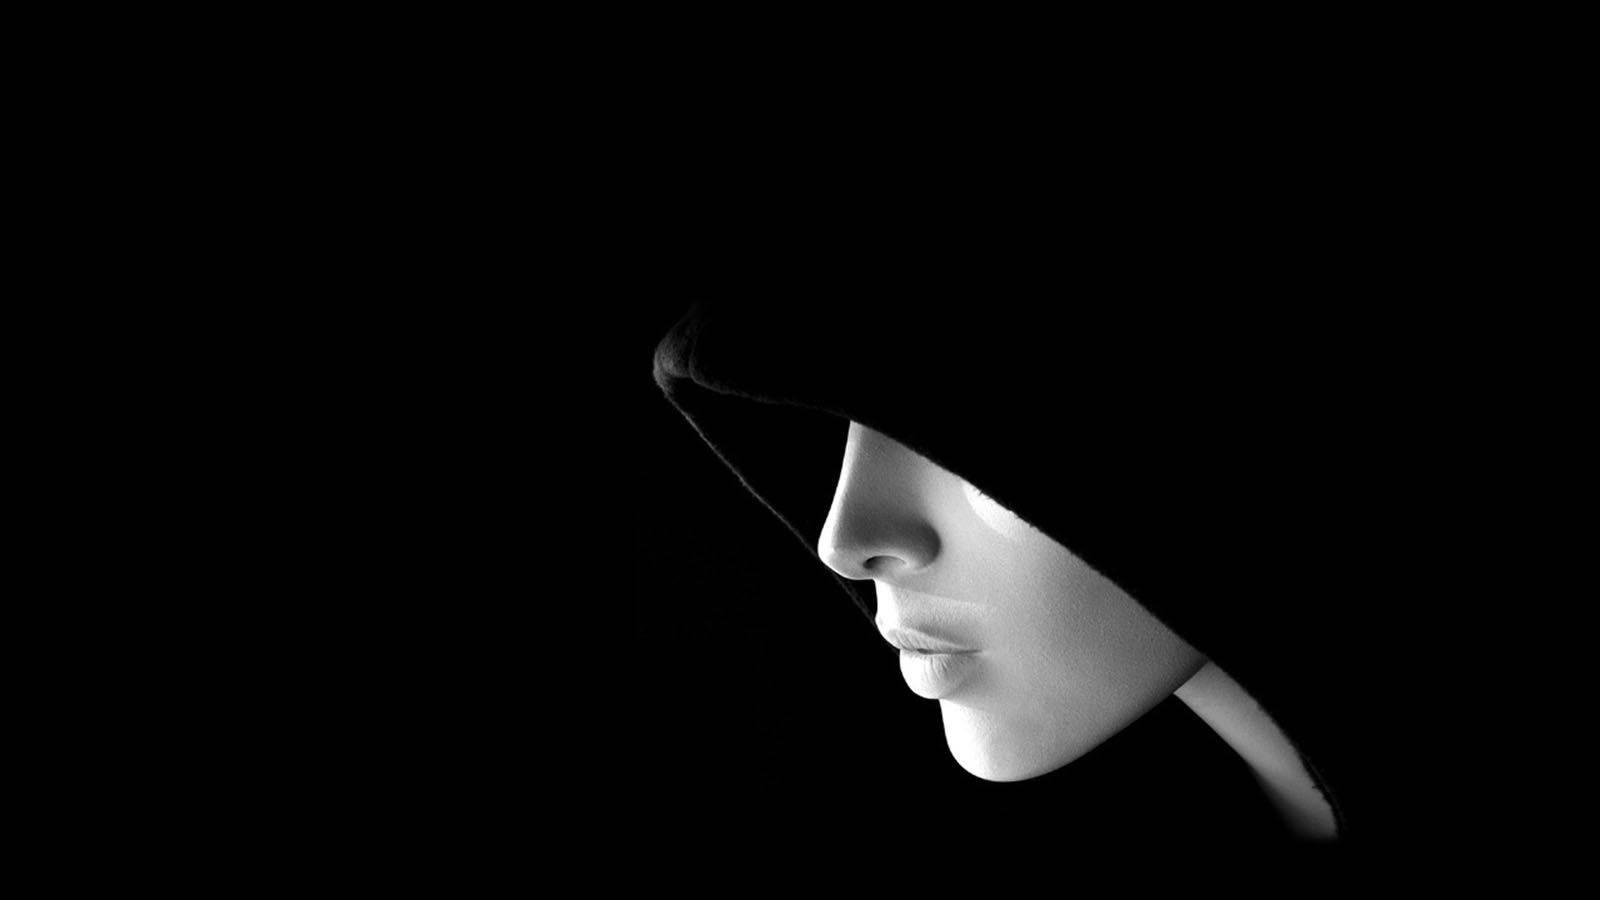 Scary hoody girl in black and white desktop wallpaper.